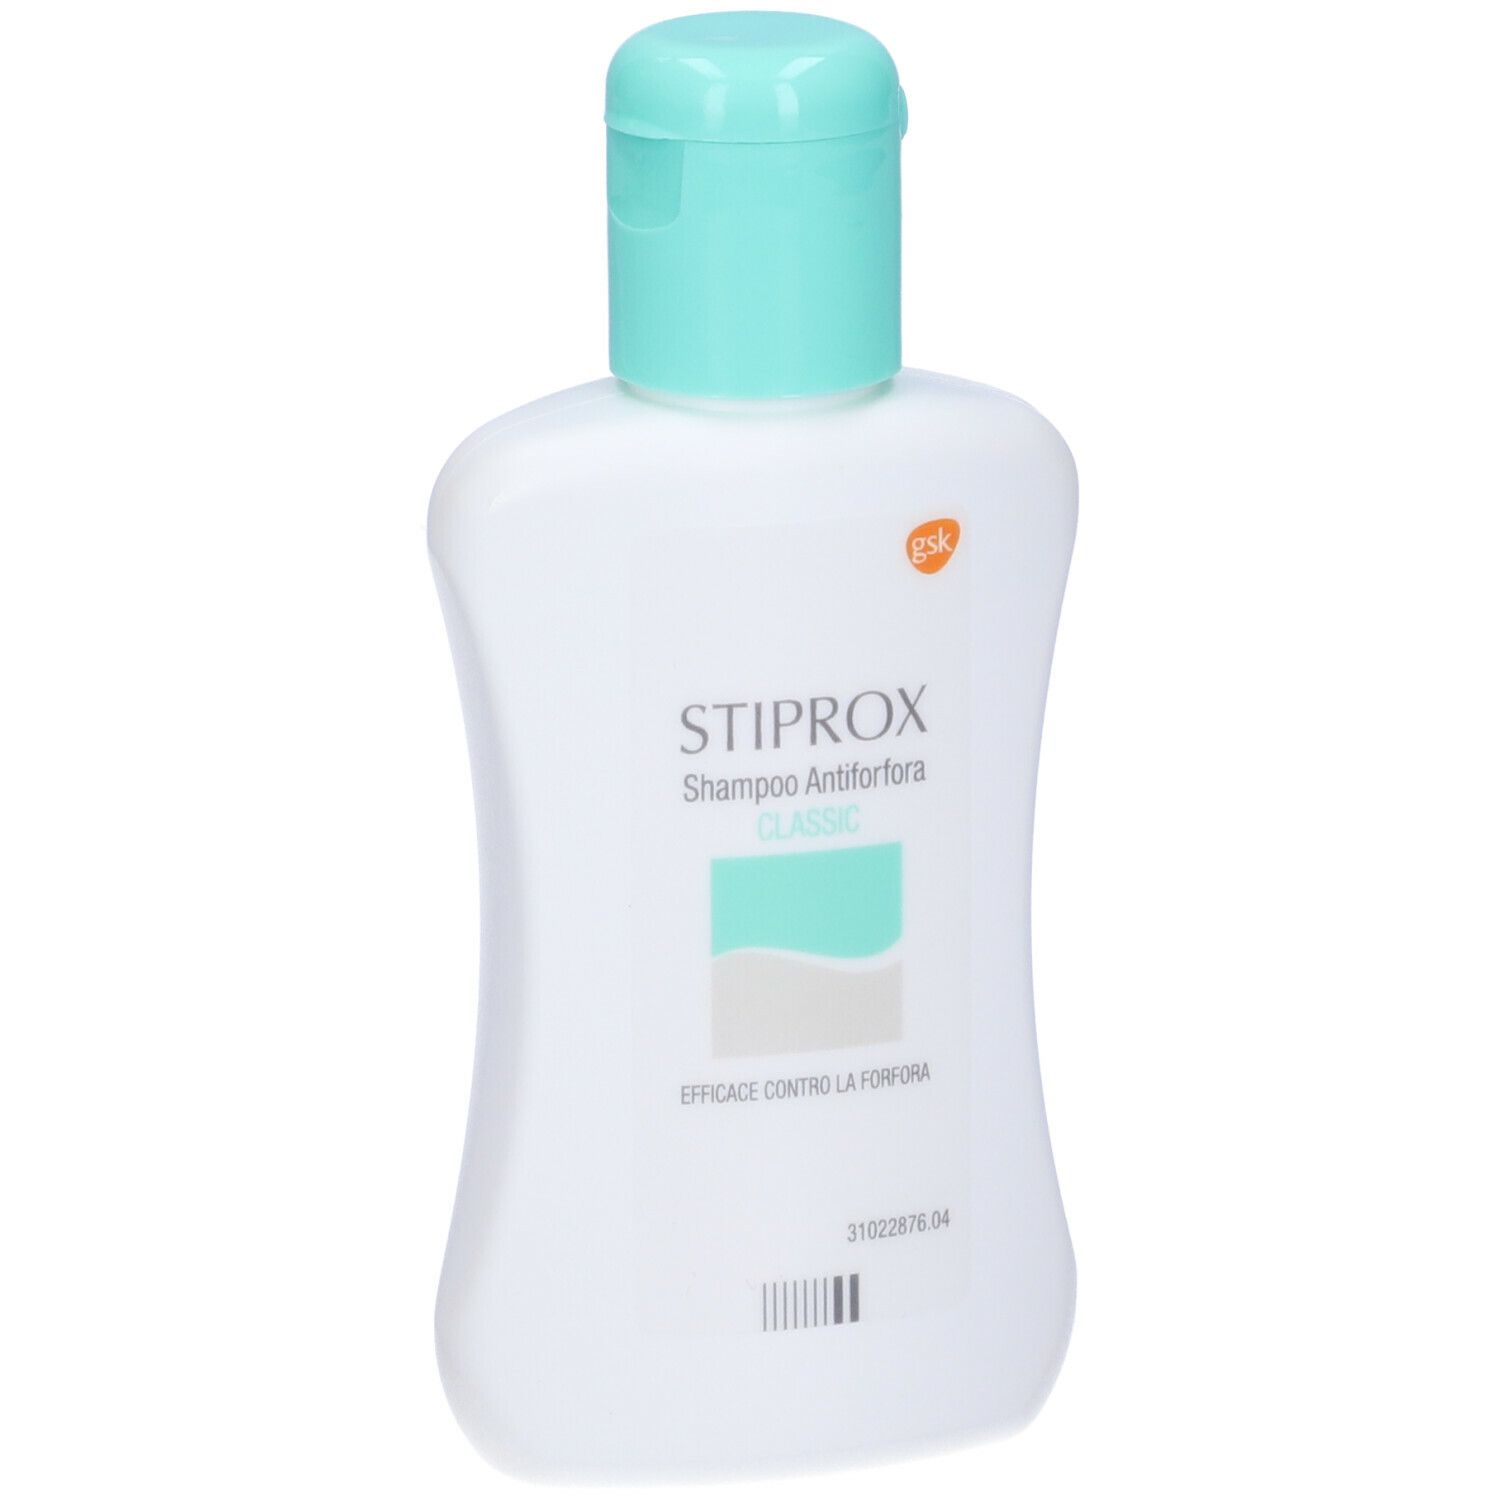 STIPROX® Shampoo Antiforfora Classic